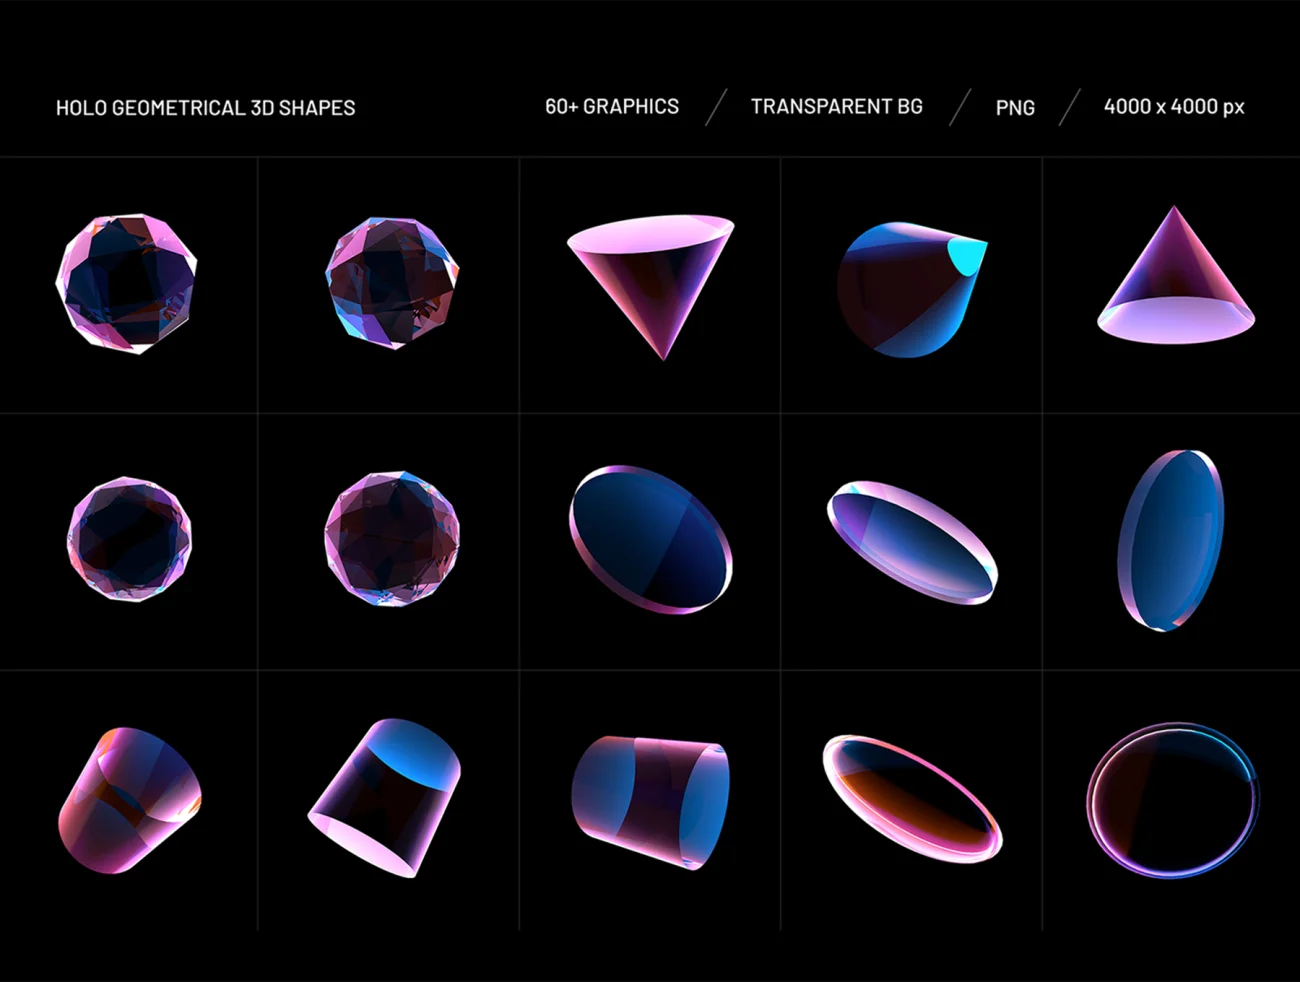 60款全息几何3D形状模型素材 Holo Geometrical 3D Shapes Collection .sketch .psd .ai .ae .id .ppt .xd .figma .an插图7